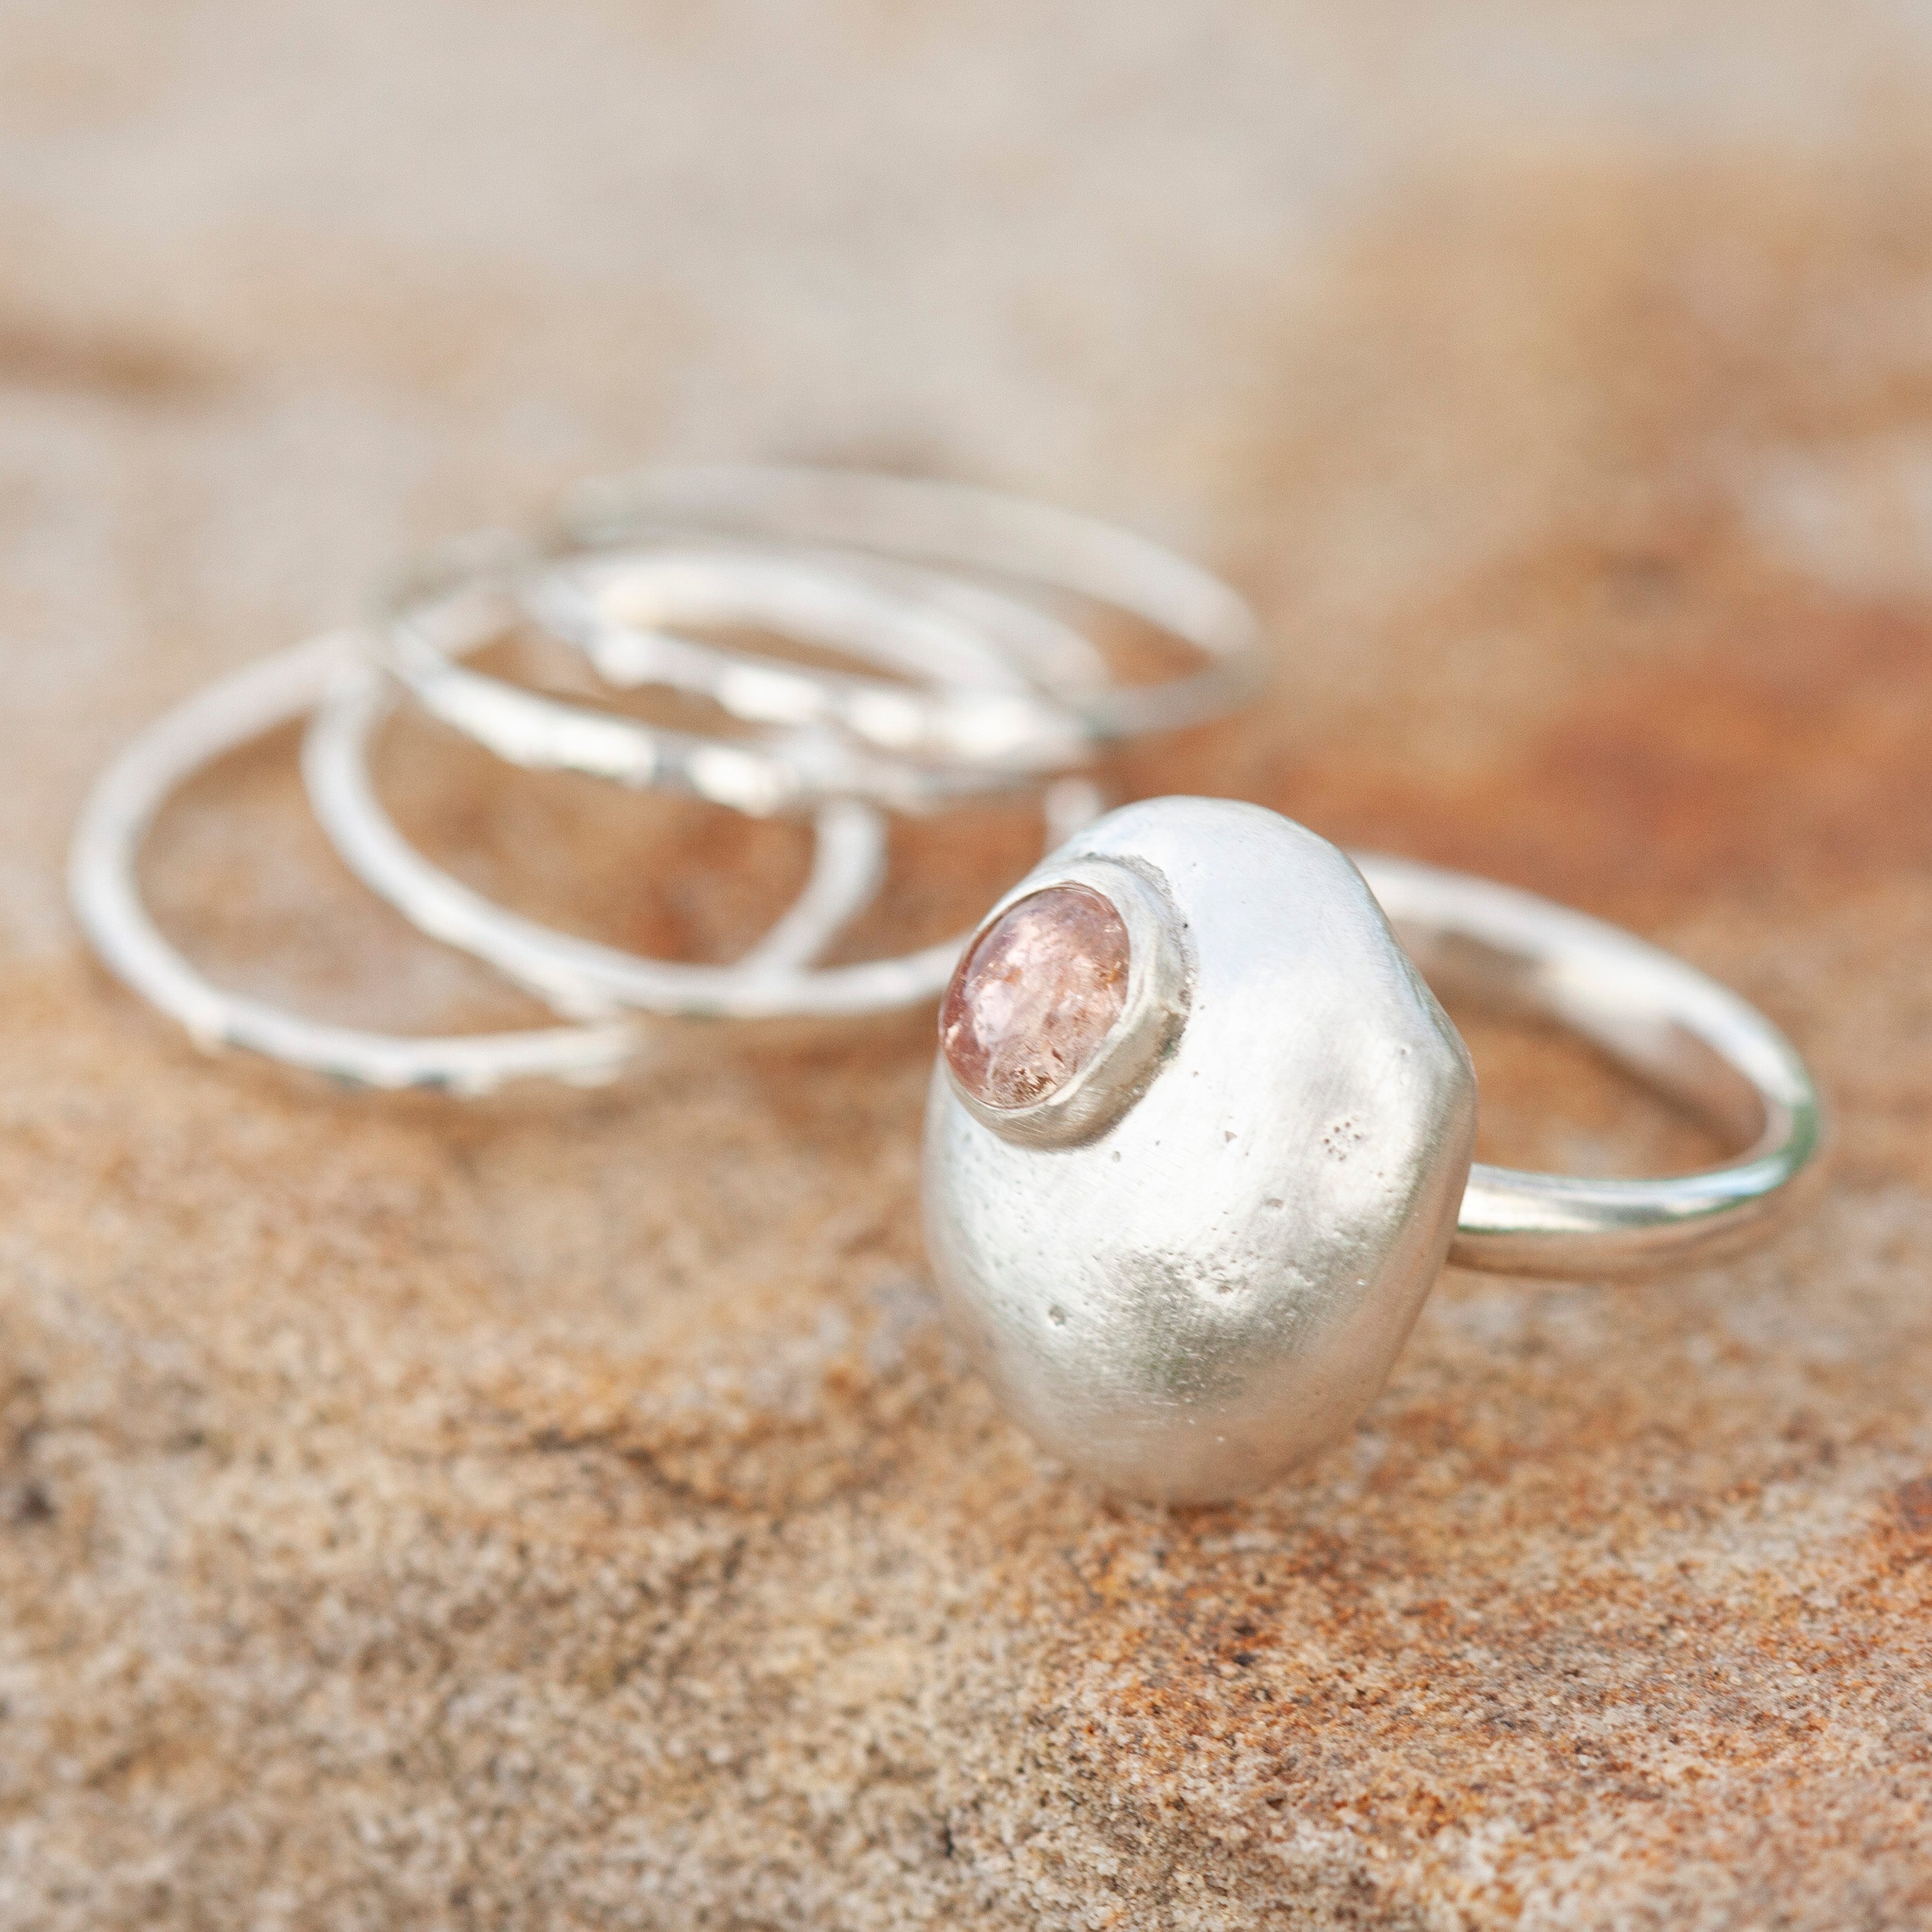 OOAK • Silver Pebble ring set #2, pink tourmaline, size 57,5 (ready to ship)